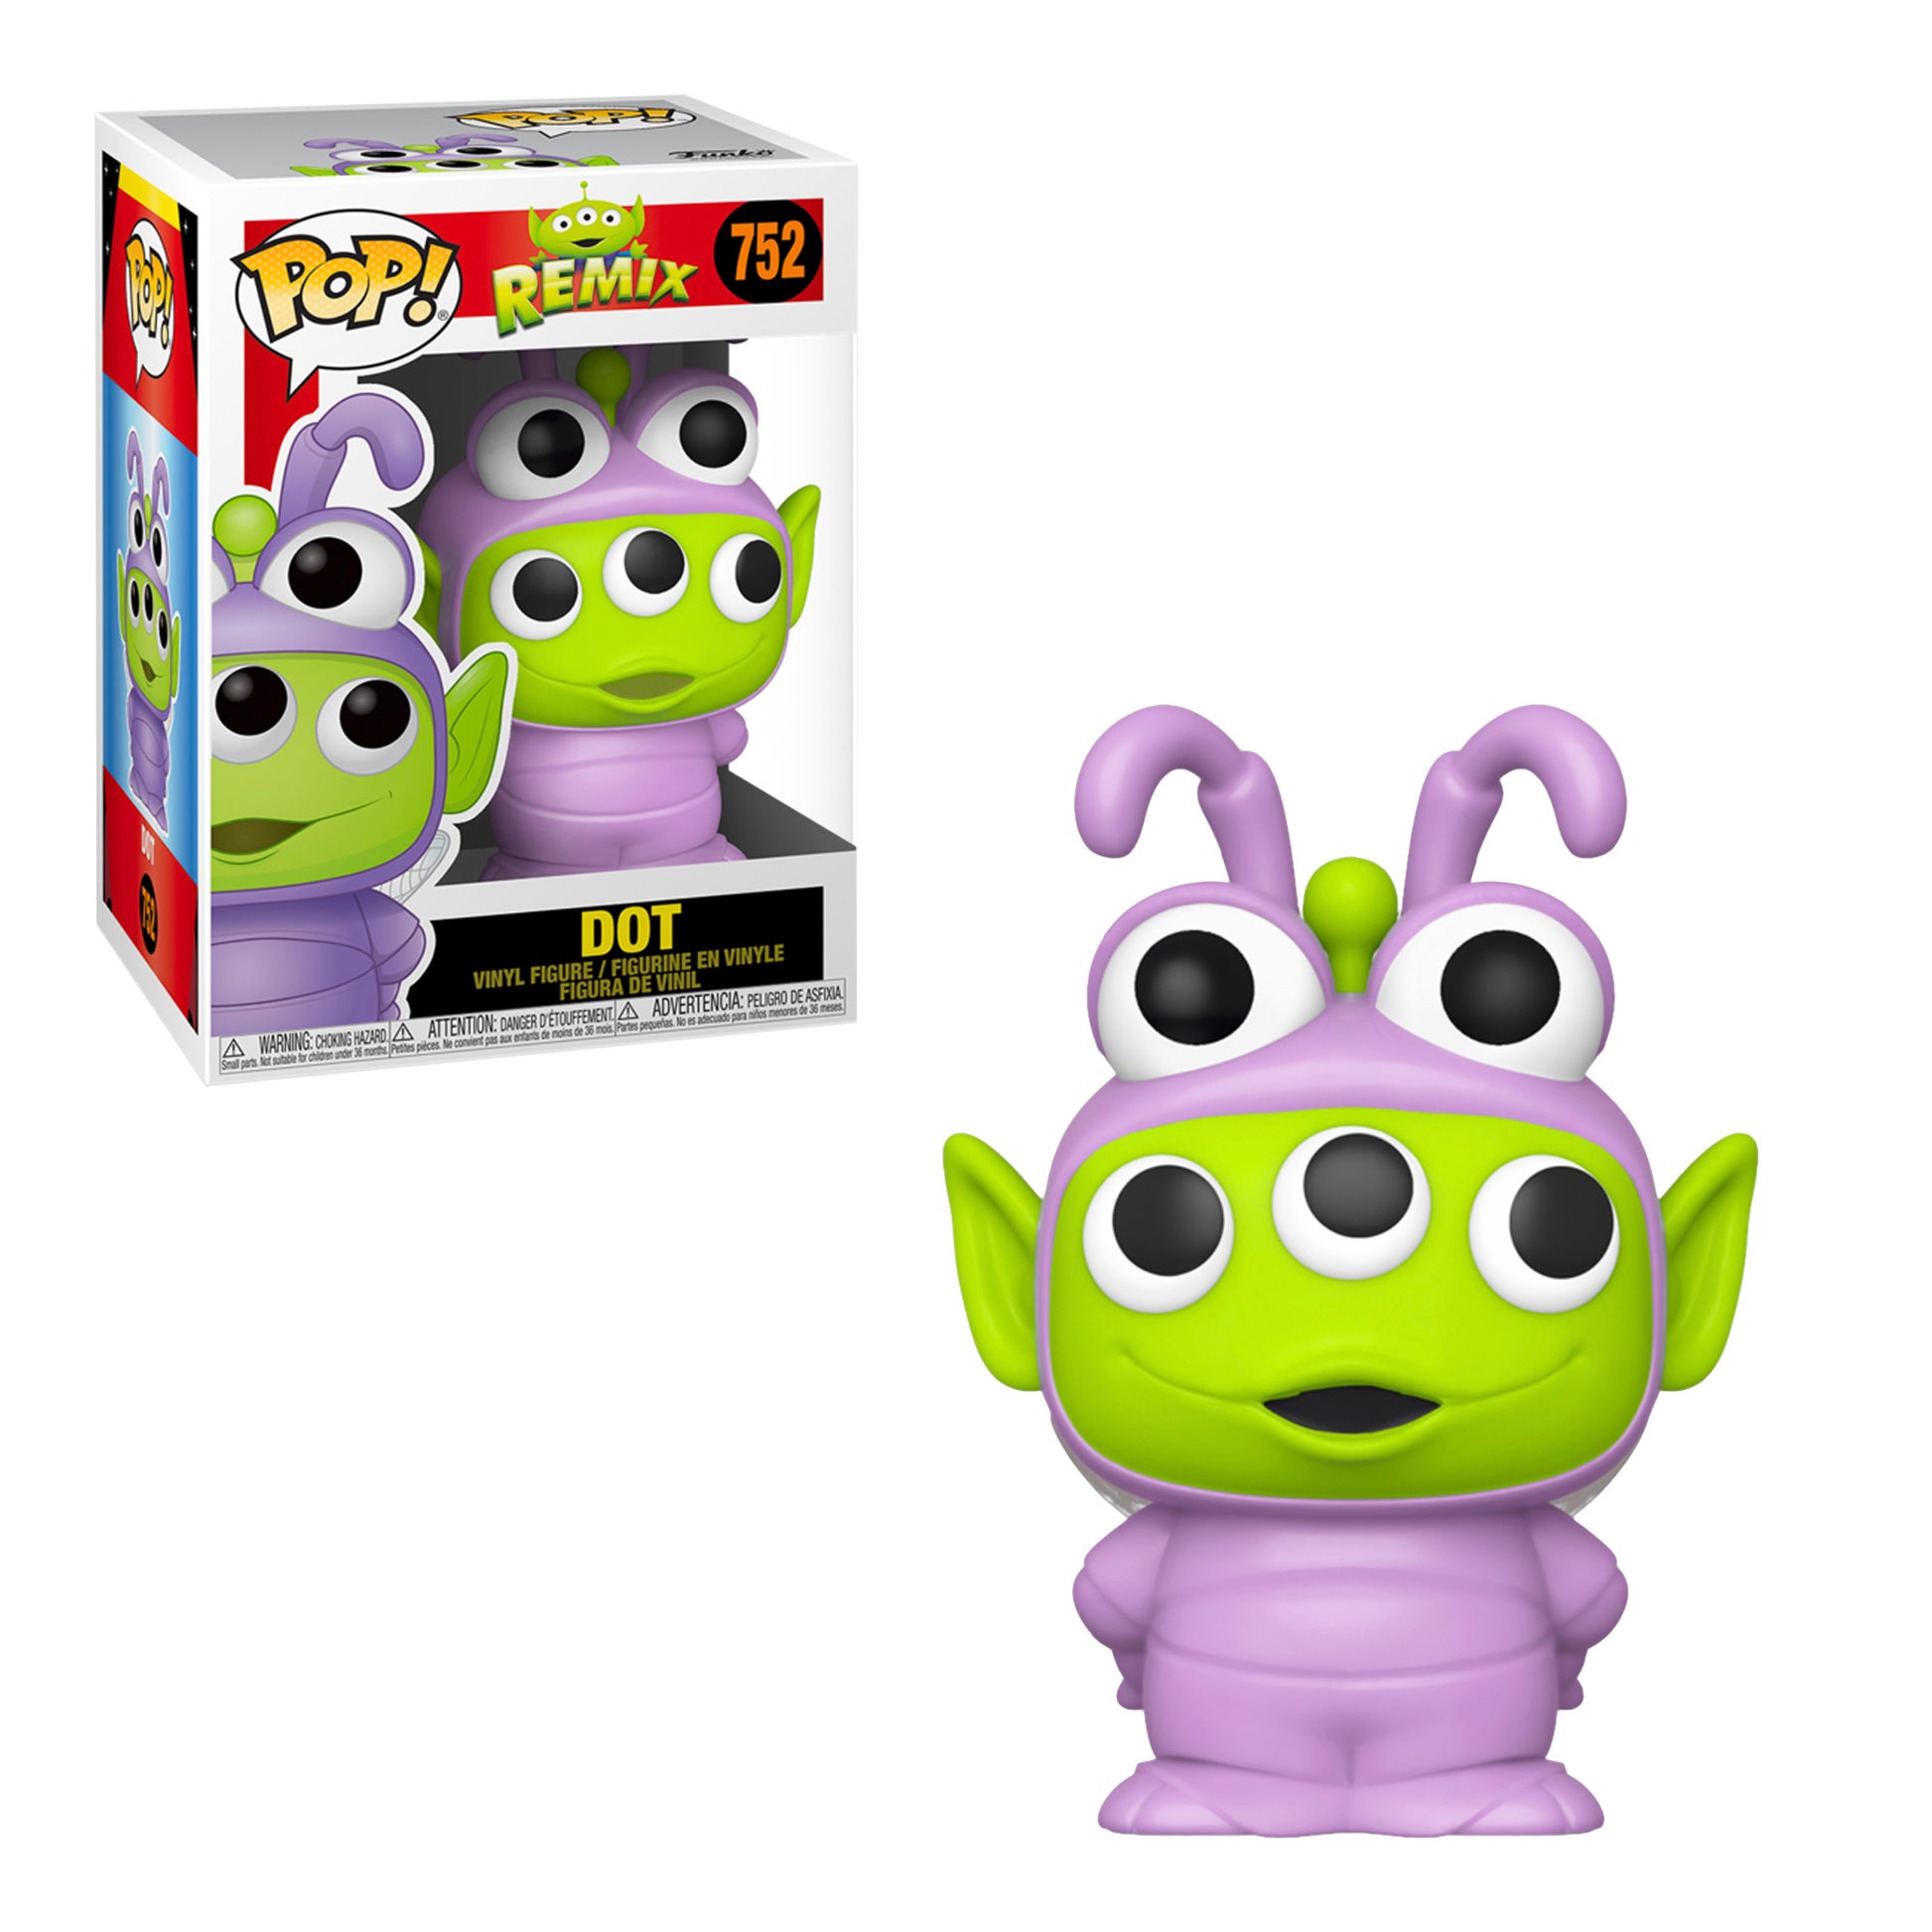 Figurine Funko POP Alien (525) Toy Story 4 Disney